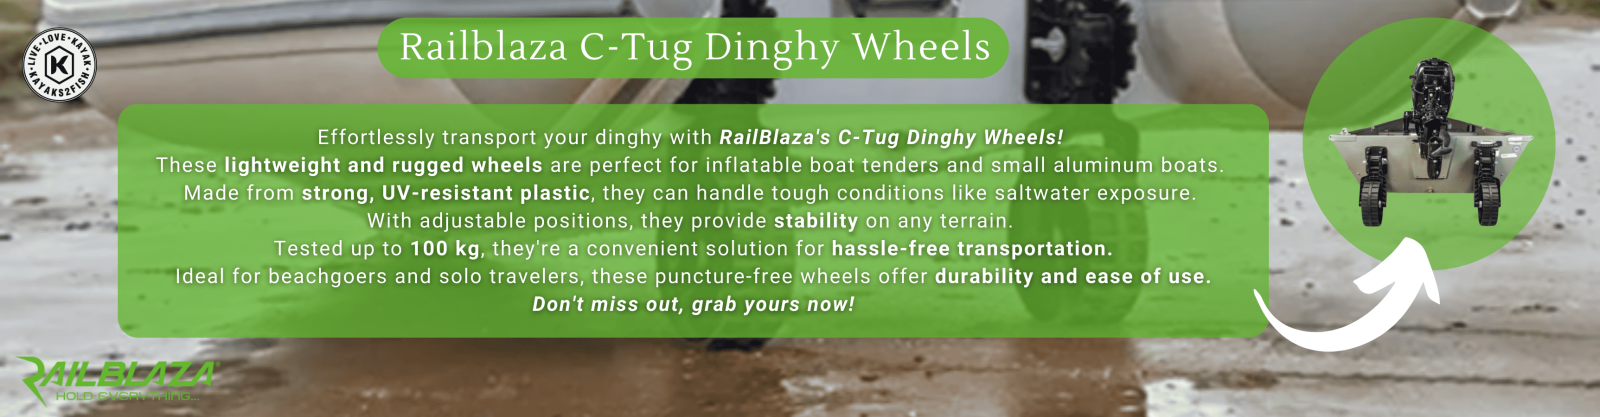 Railblaza C-Tug Dinghy Wheels